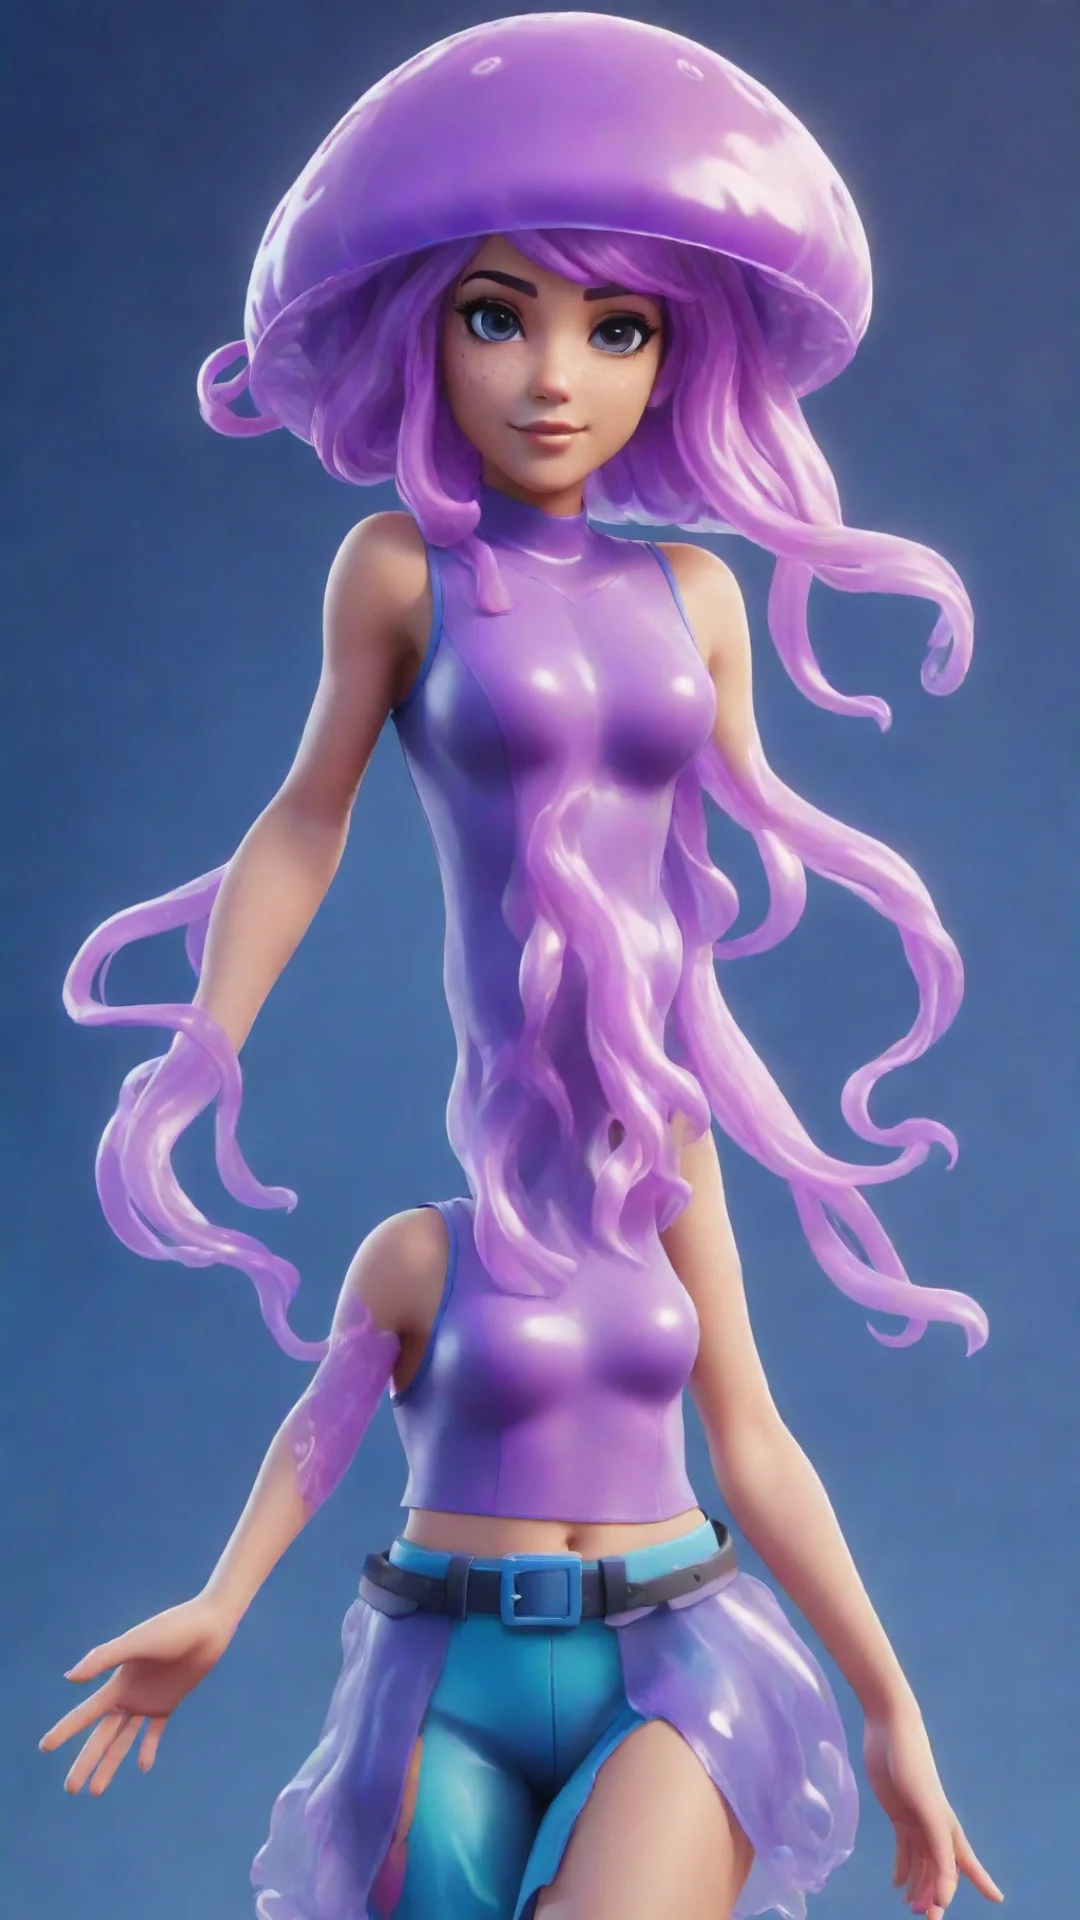 artstation art jellyfish style fortnite girl skin confident engaging wow 3 tall